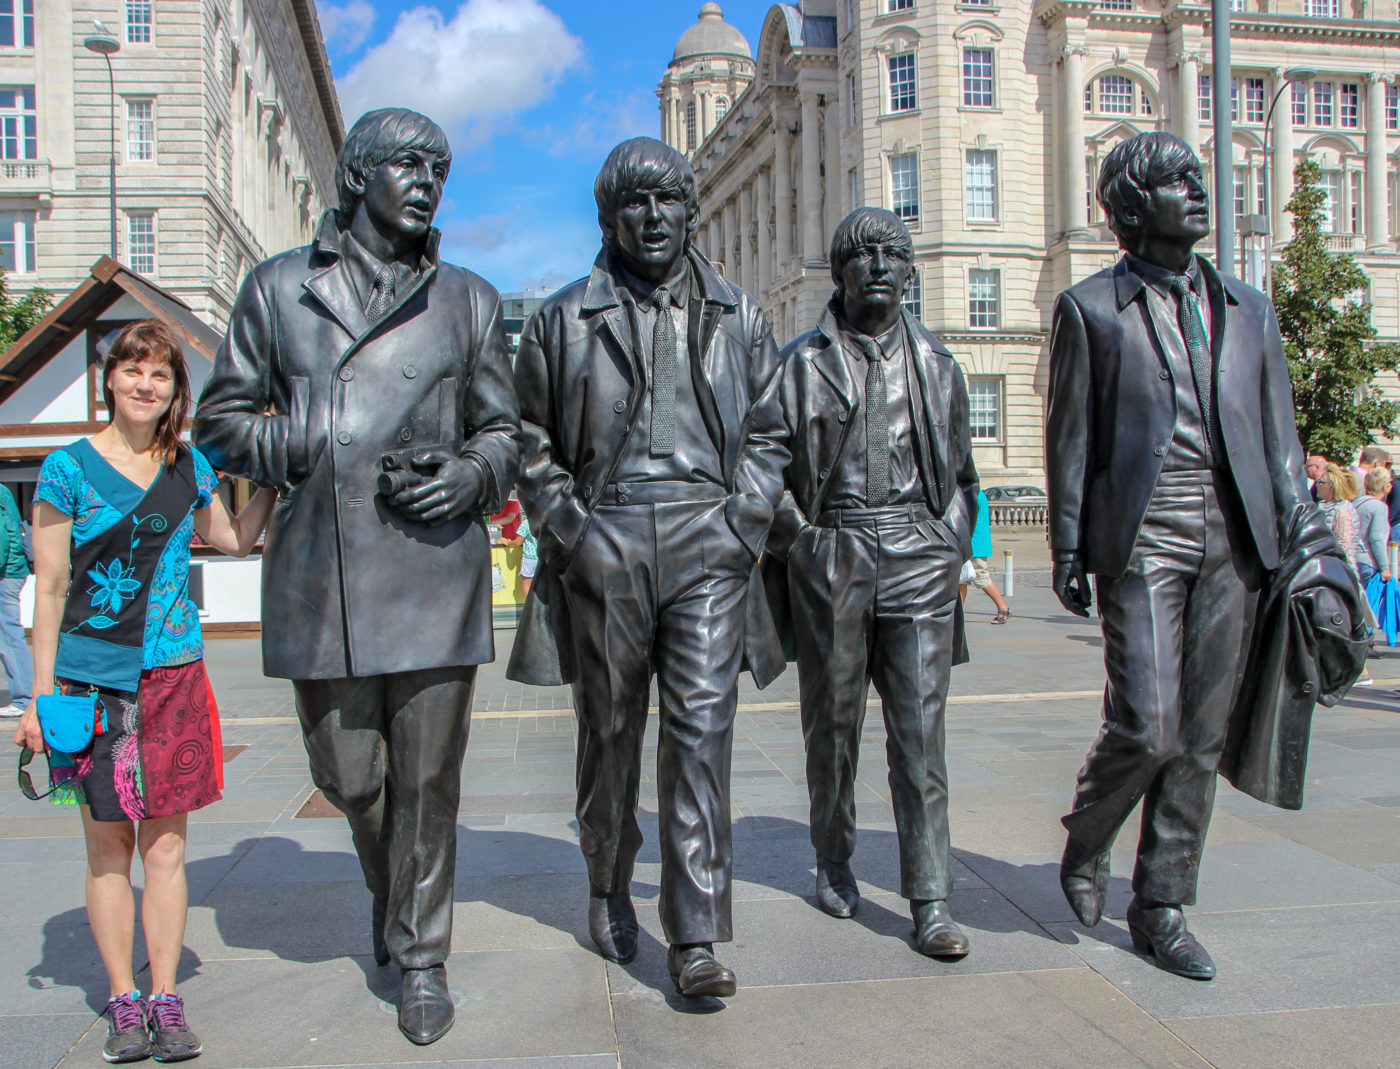 Beatles Liverpool Tour, Let It Be True Wind Healing Travel